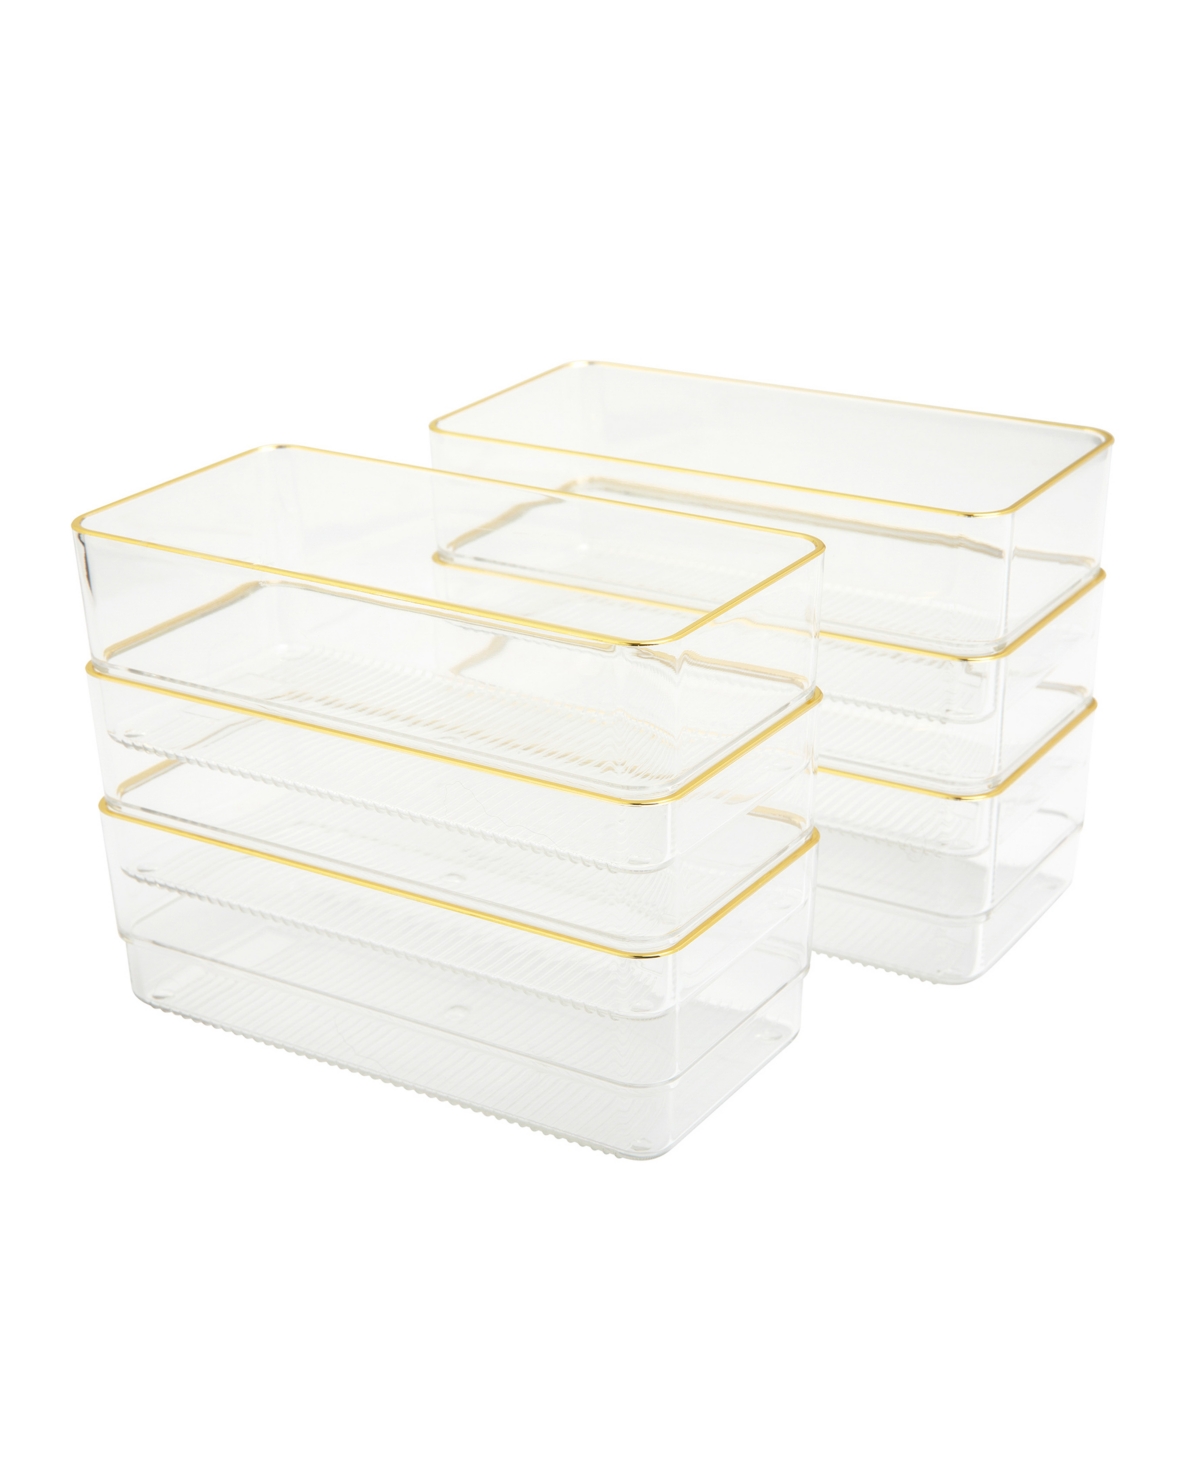 Martha Stewart Kerry 6 Piece Plastic Stackable Office Desk Drawer Organizers, 6" X 3" In Clear,gold Trim